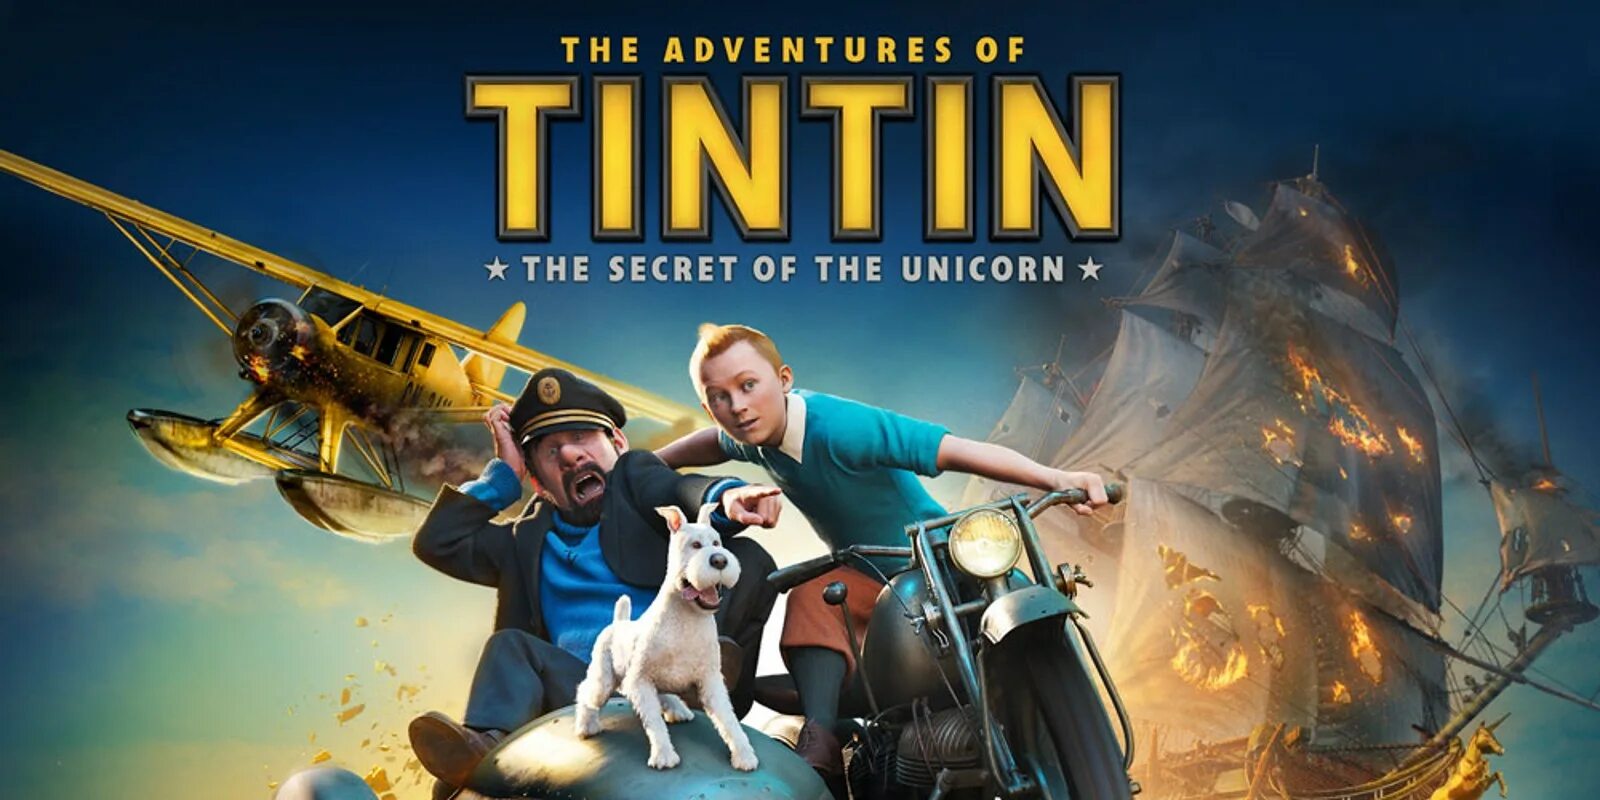 Тин тин 2 часть. Приключения Тинтина 1. Тим тим и тайна единорога. Приключения Тин Тин тайна единорога. Приключения Тинтина: тайна единорога (2011/II).